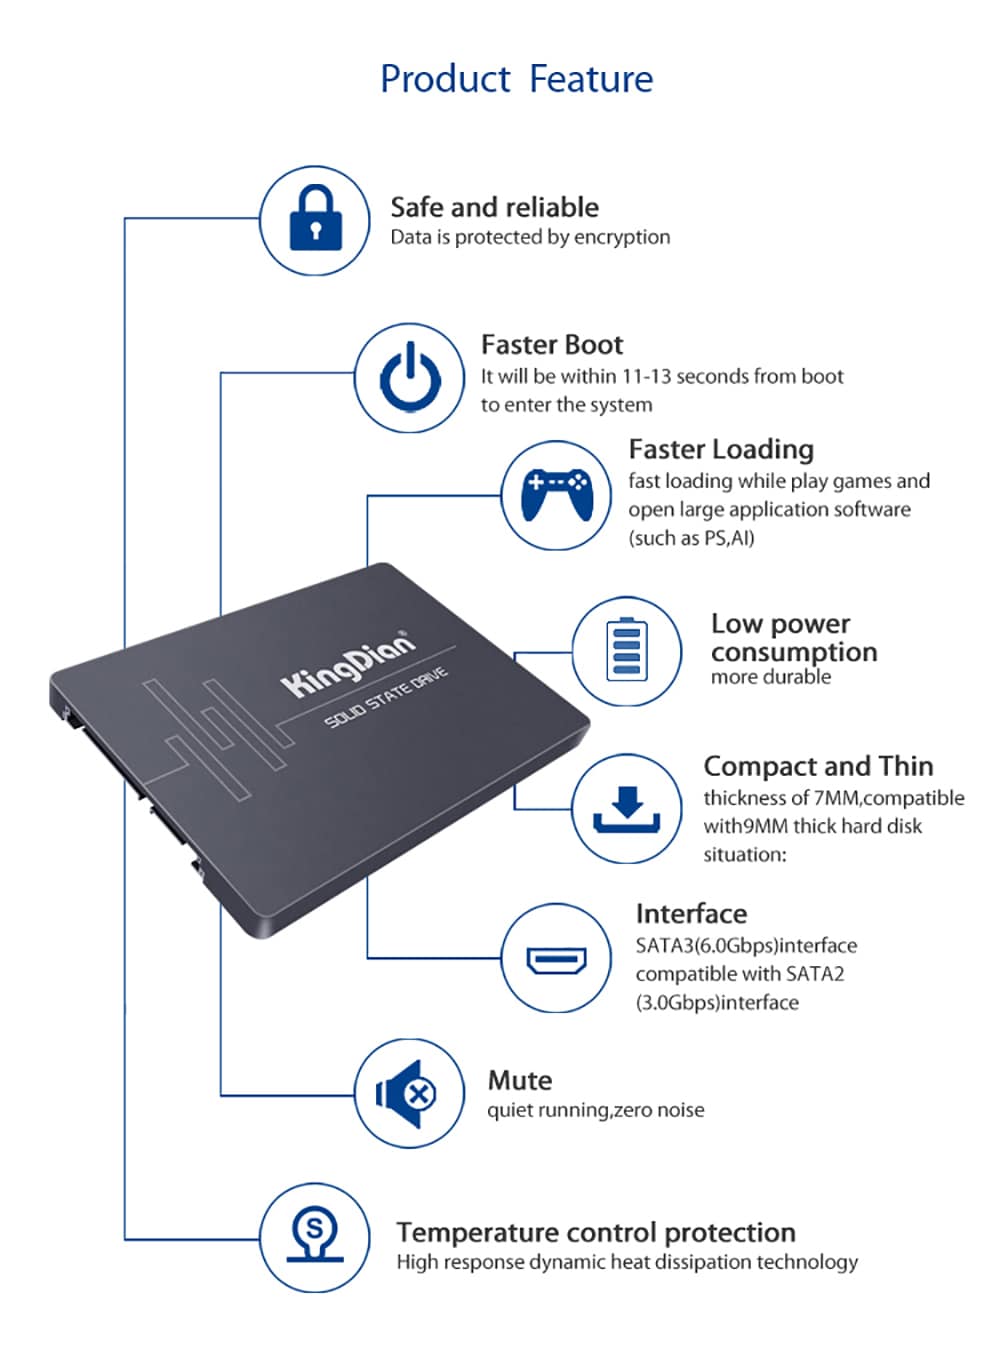 SSD SATA3 2.5 inch 1TB Hard Drive Disk HD HDD factory directly KingDian Brand- Black